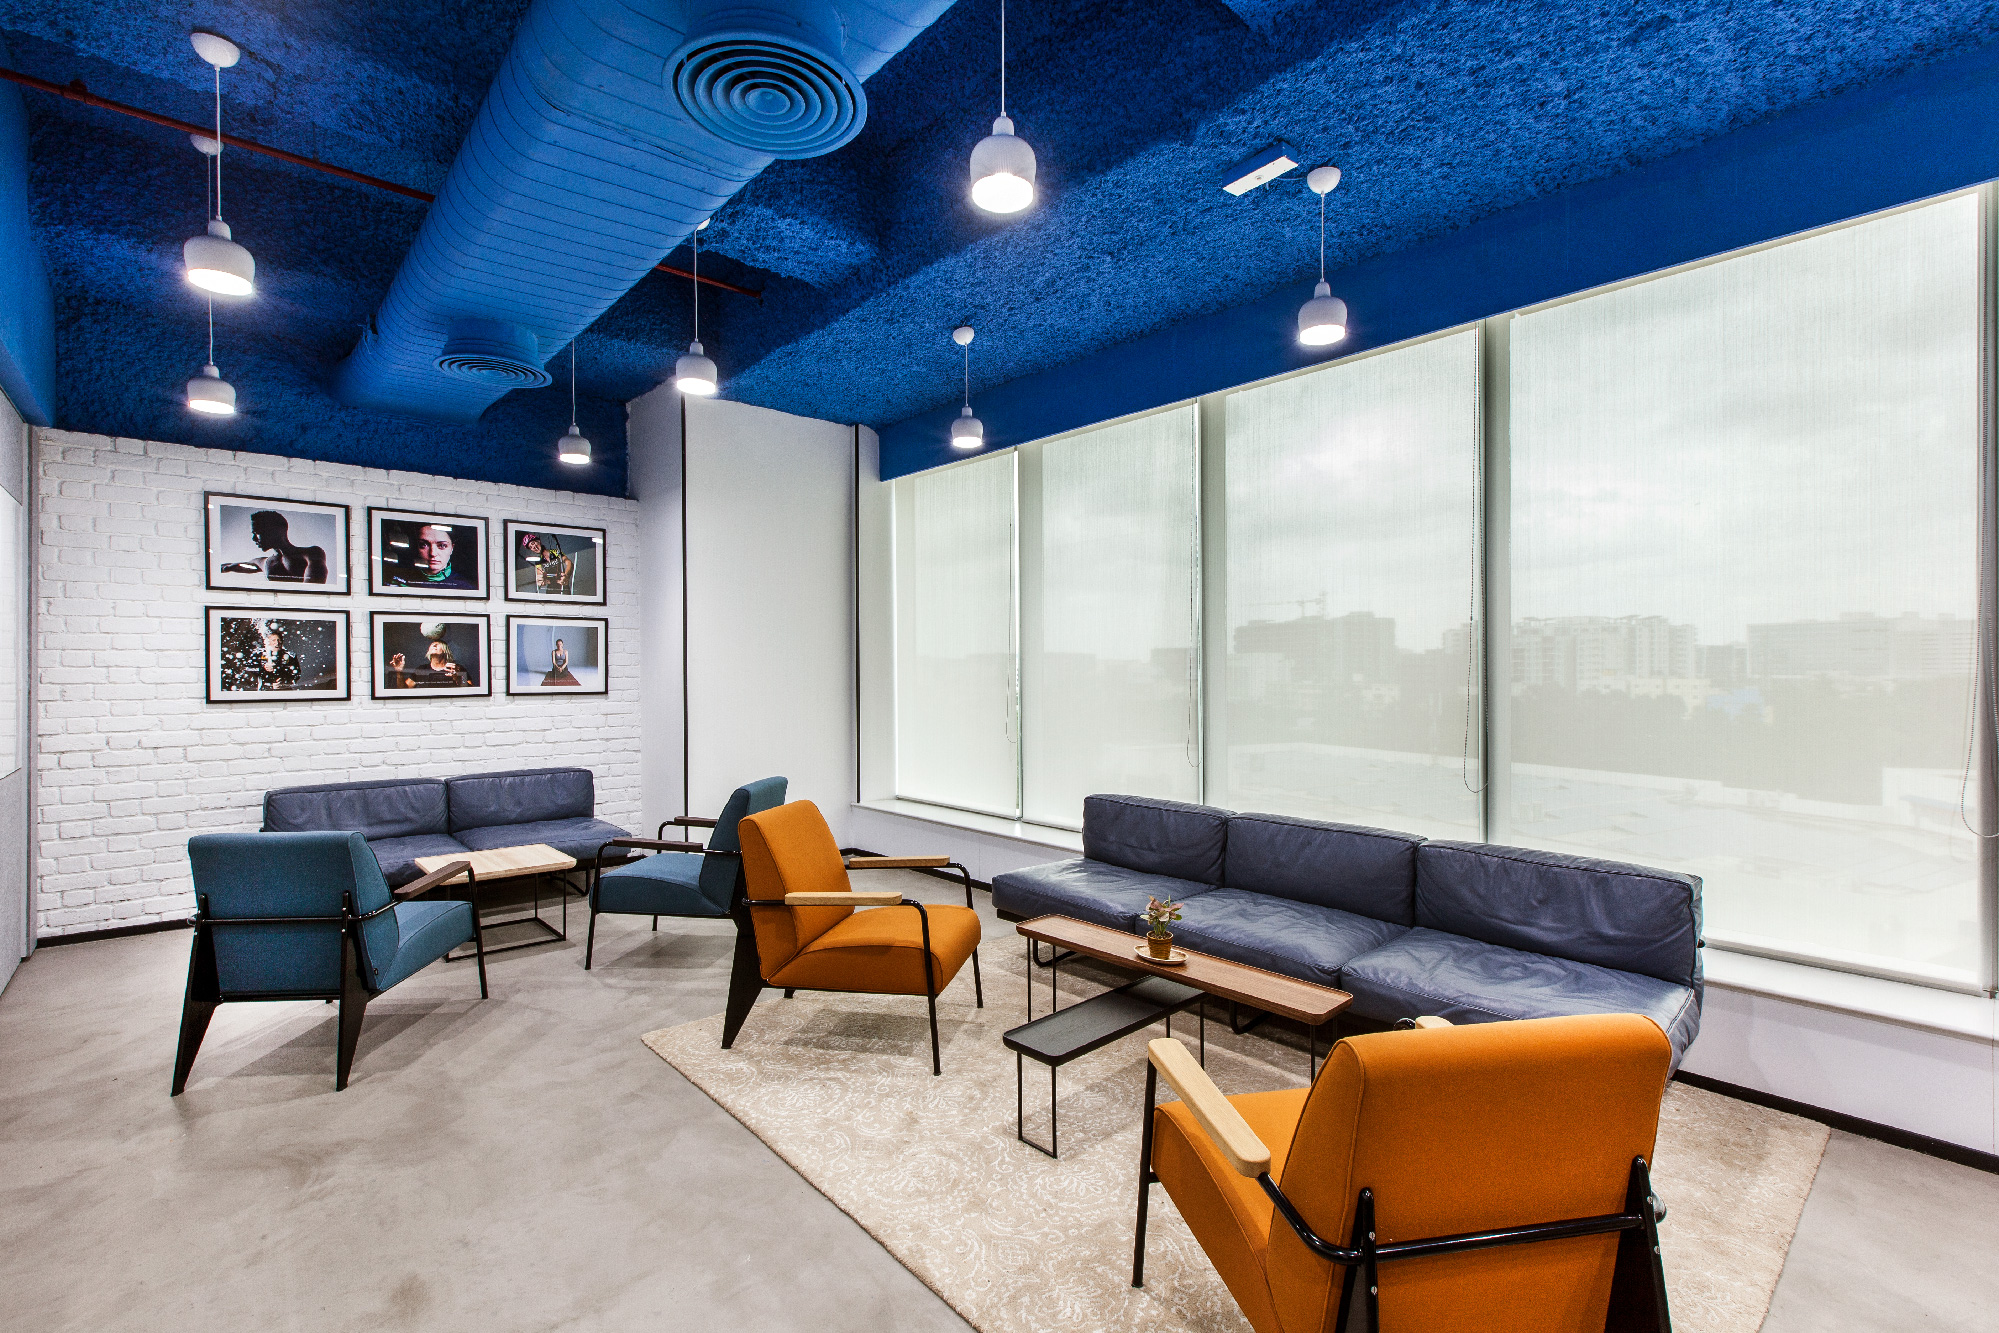 LinkedIn Office: Transparent Glasshouse Design Reflecting Open, Honest, and Constructive Work Culture